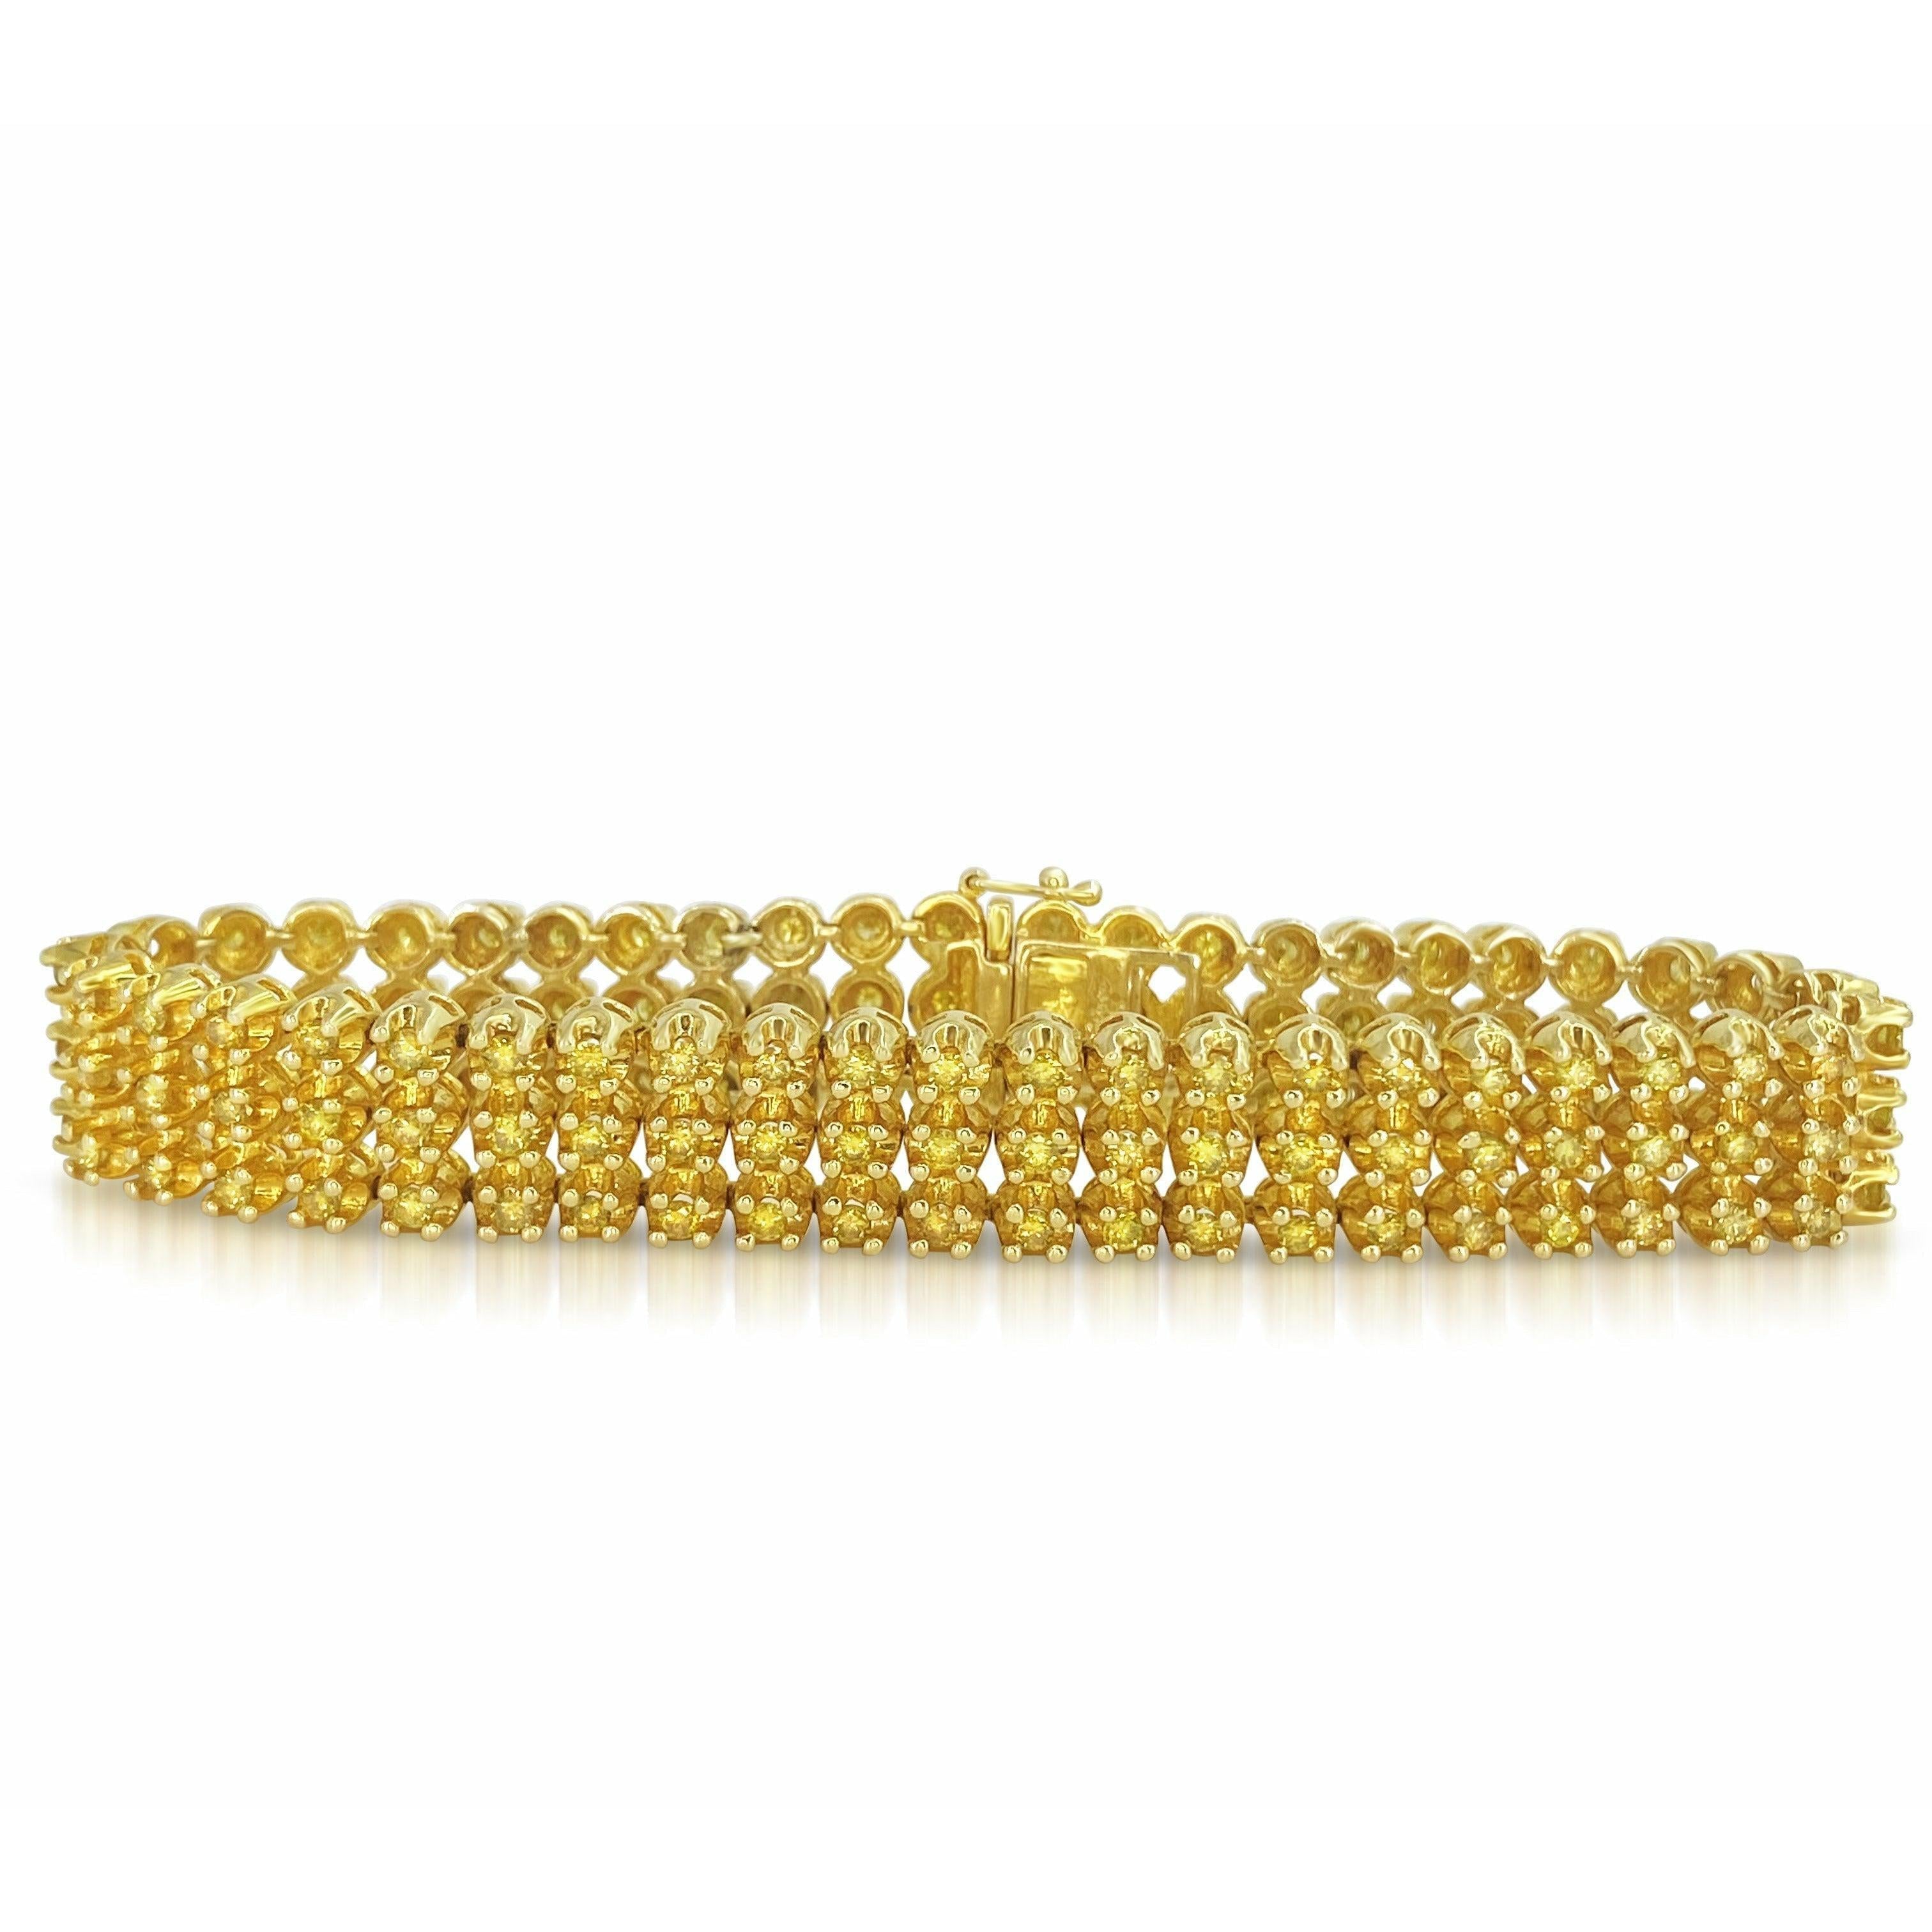 14k Solid Gold Natural Yellow Diamond Link Bracelet - 7 inch long - 12mm width - ASSAY